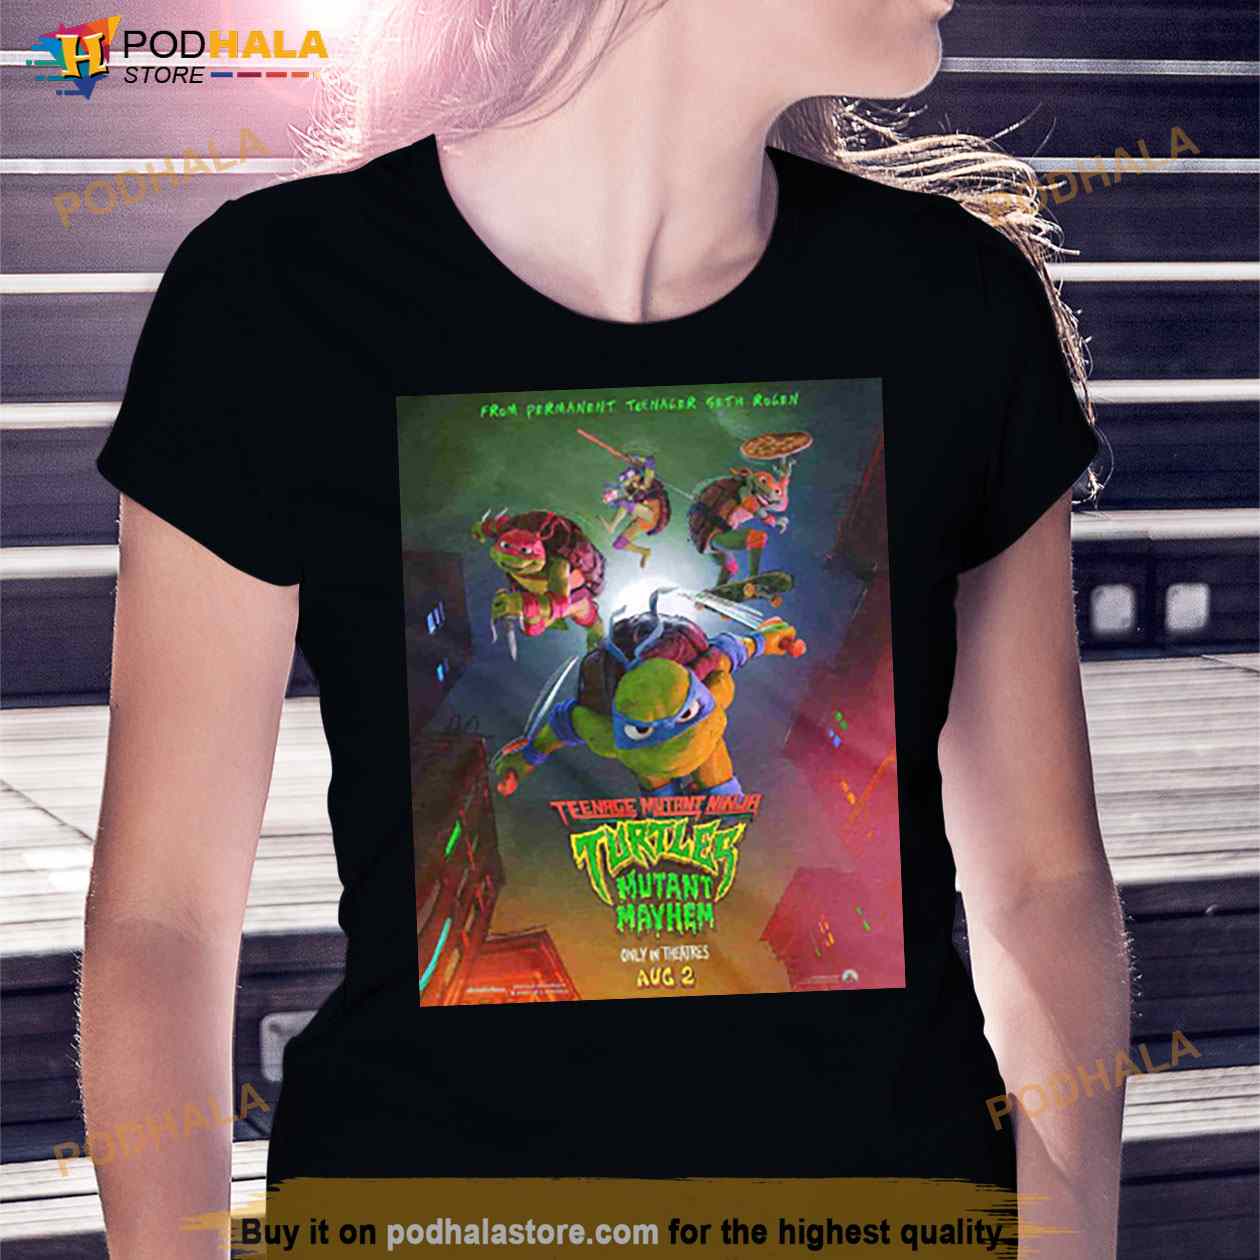 Teenage Mutant Ninja Turtles T-Shirt - For Men or Women 